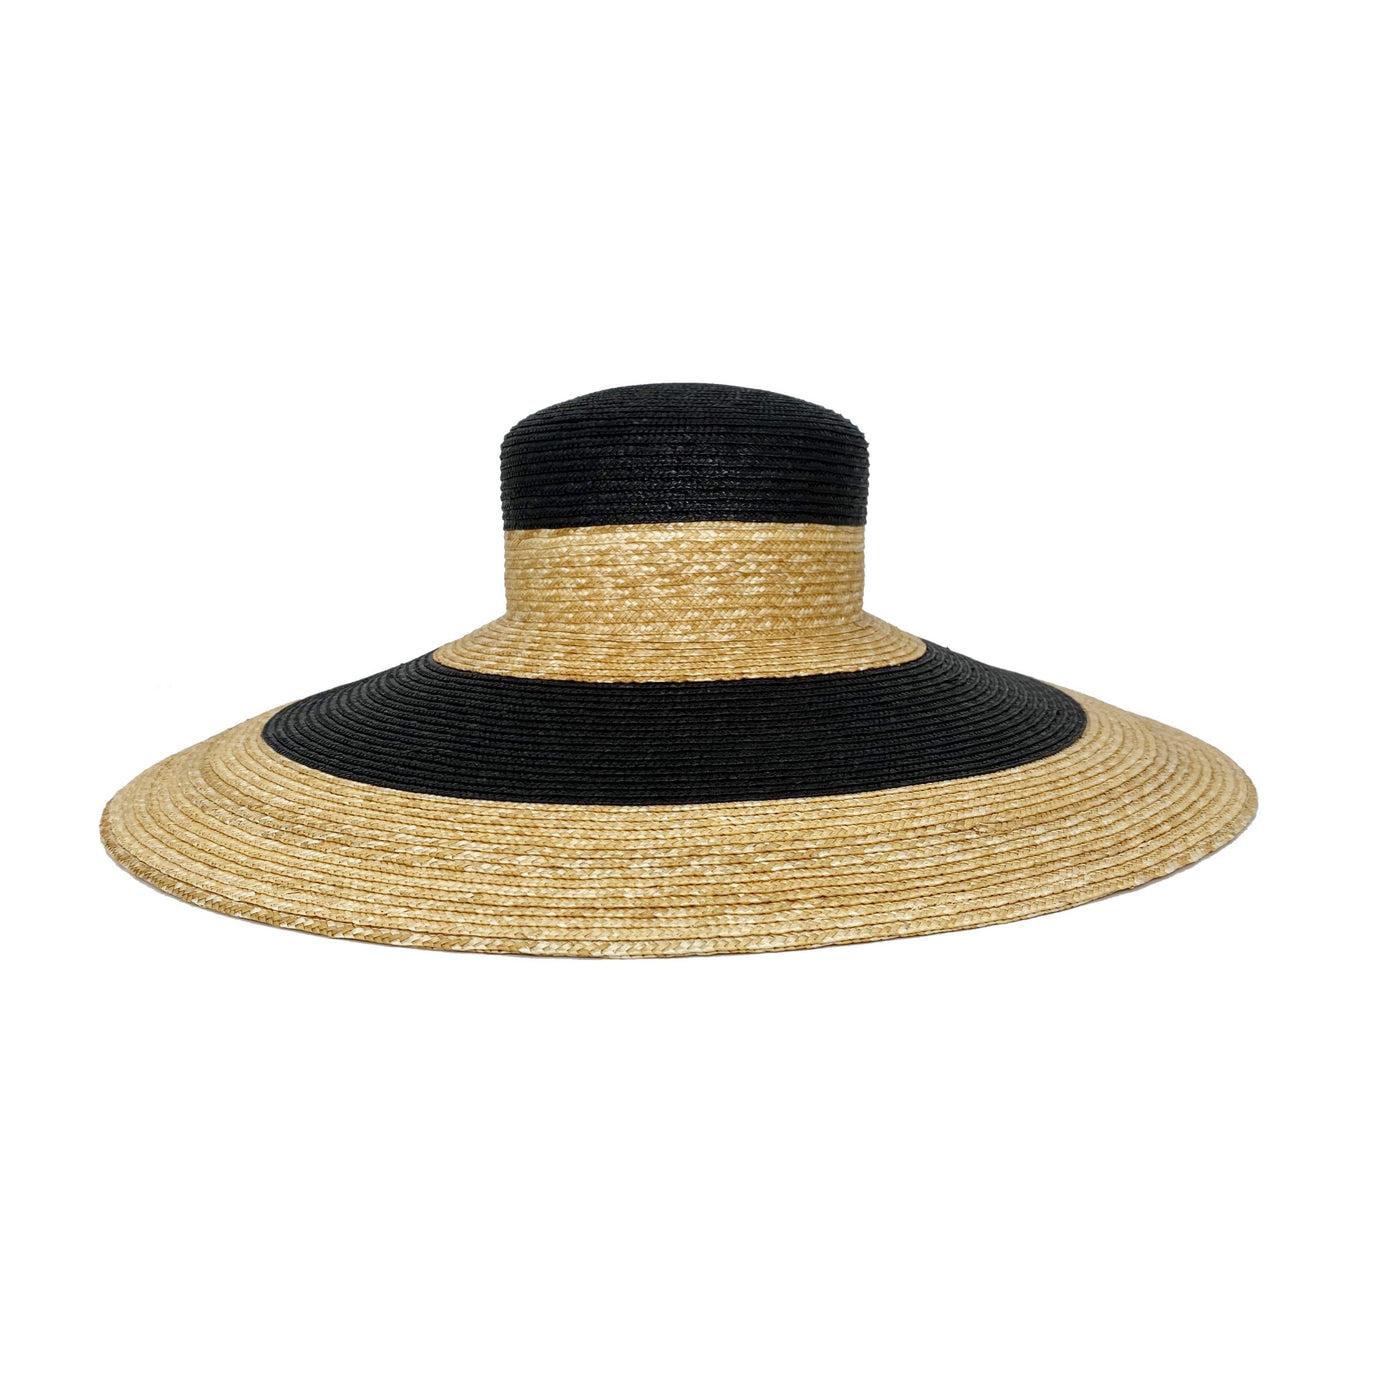 Two-tone Italian Straw Hat